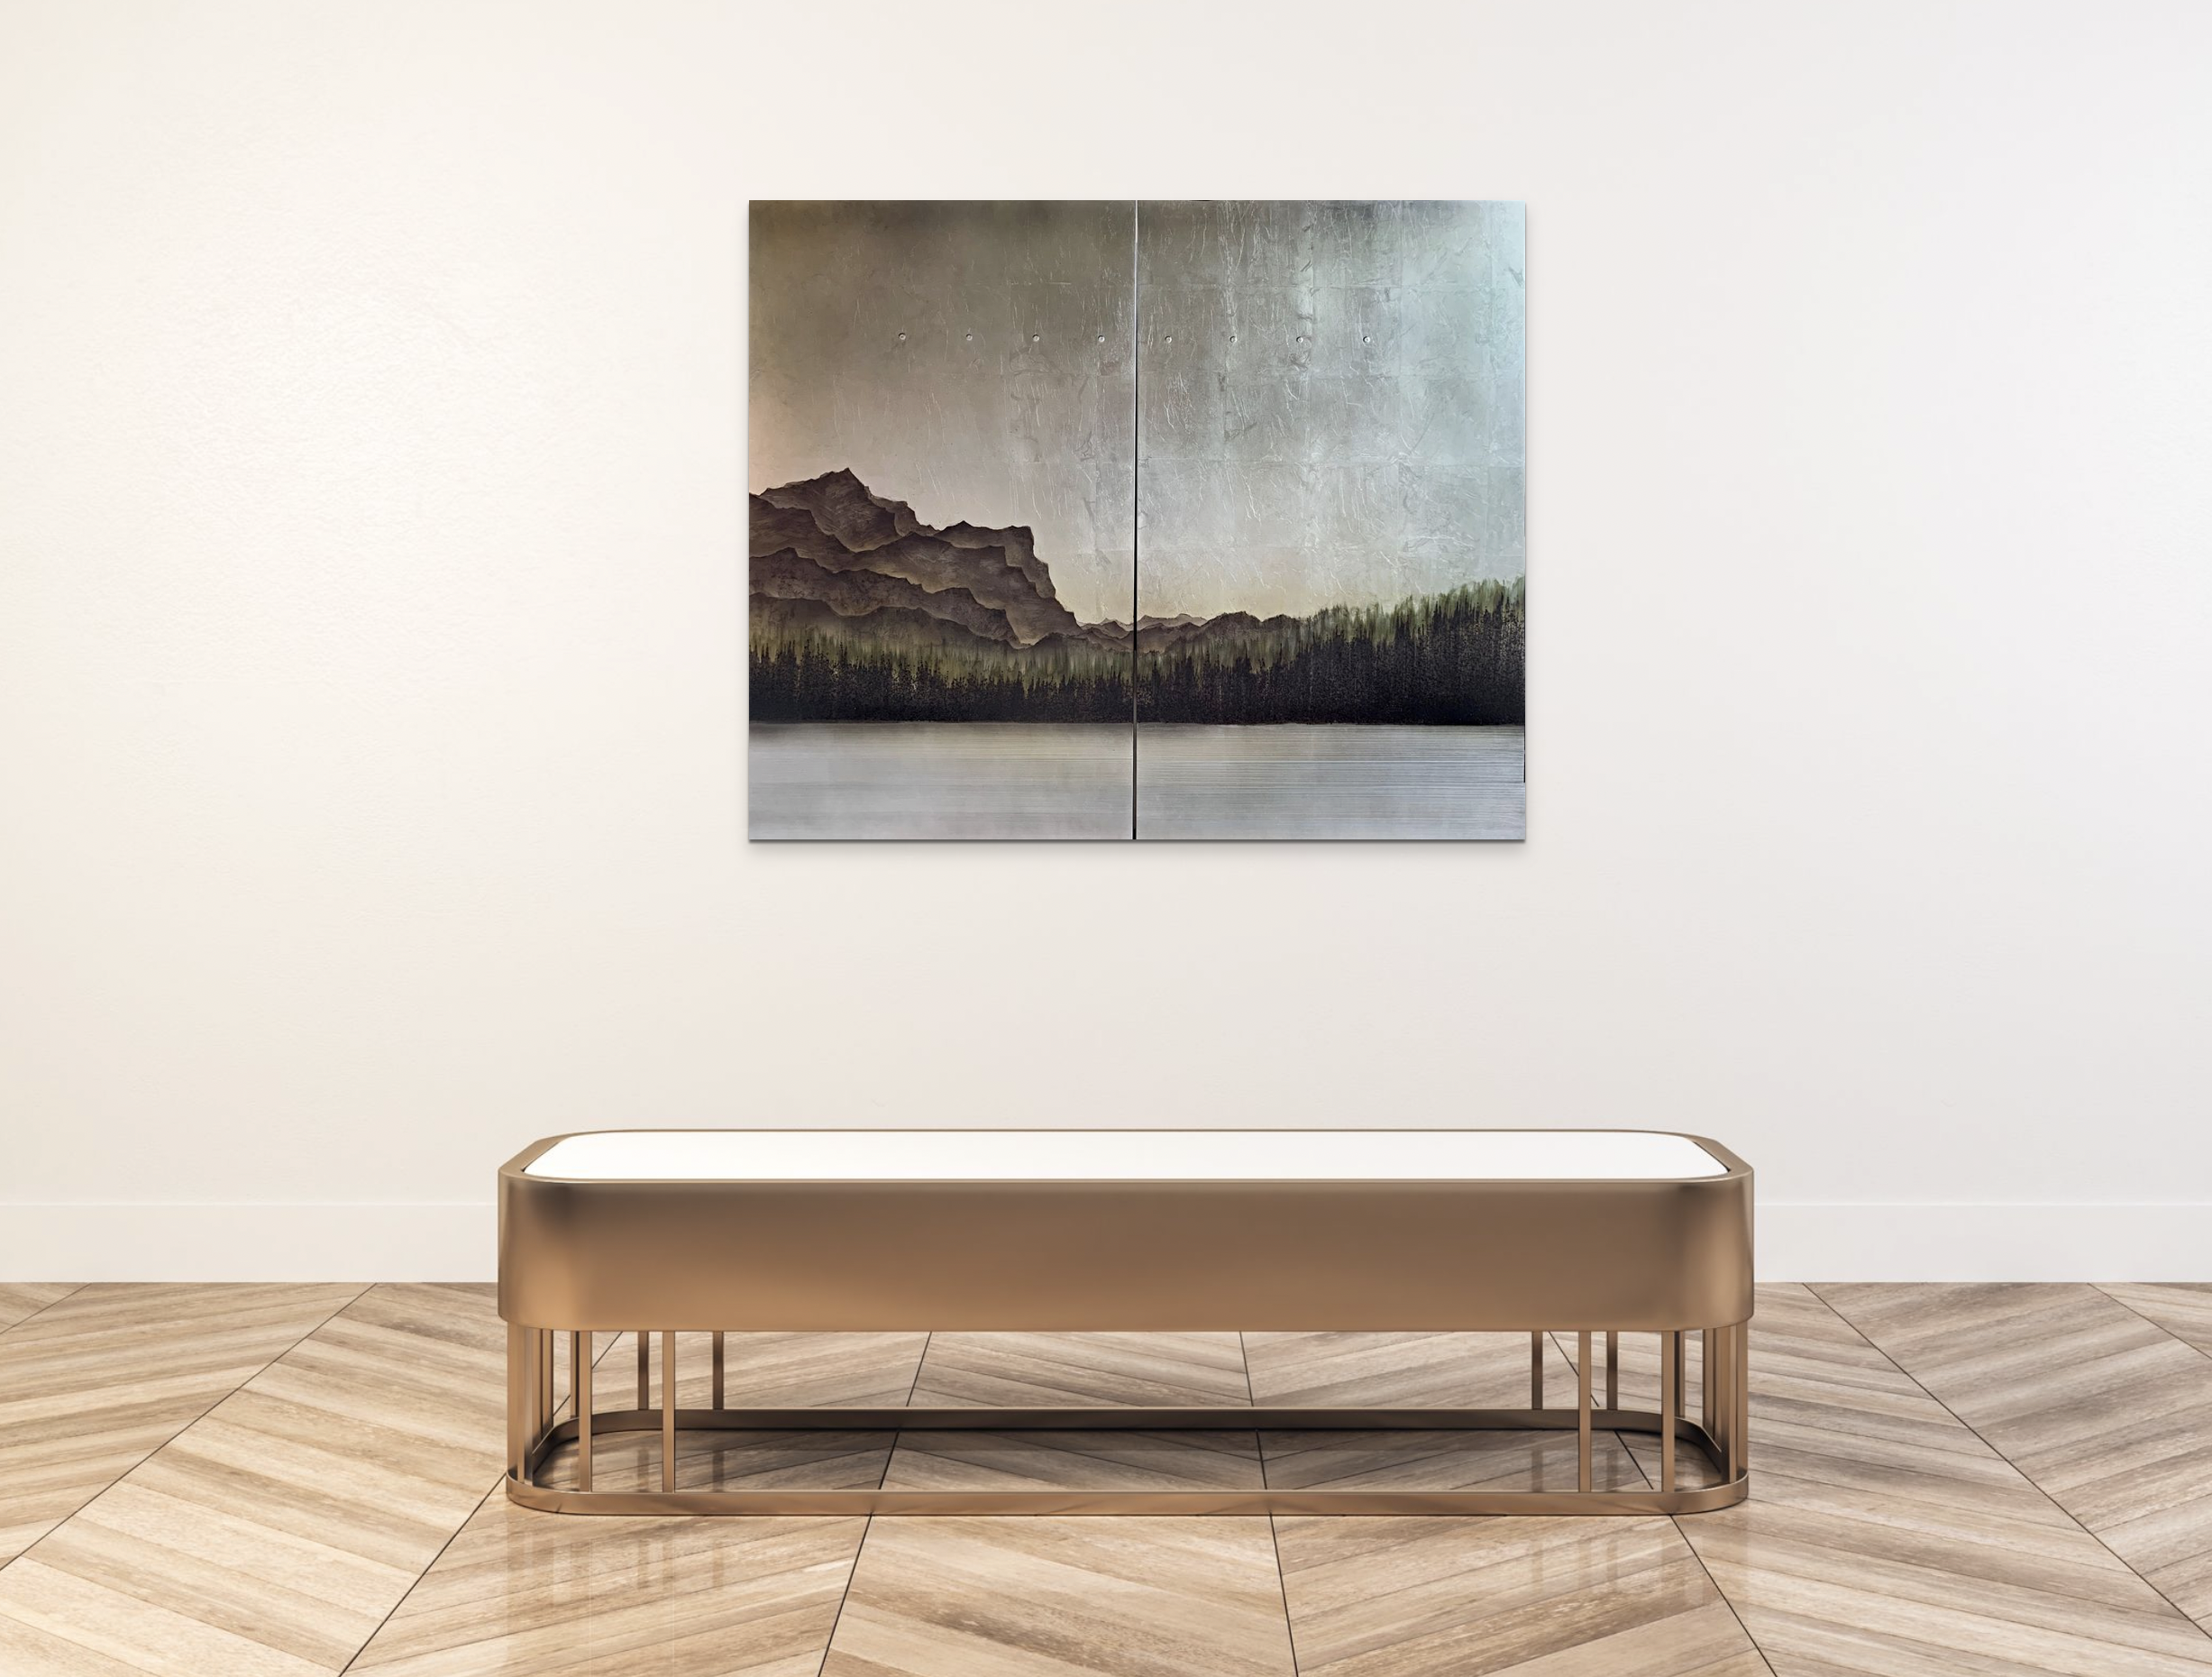 Secret Valley by David Graff | Effusion Art Gallery + Cast Glass Studio, Invermere, BC